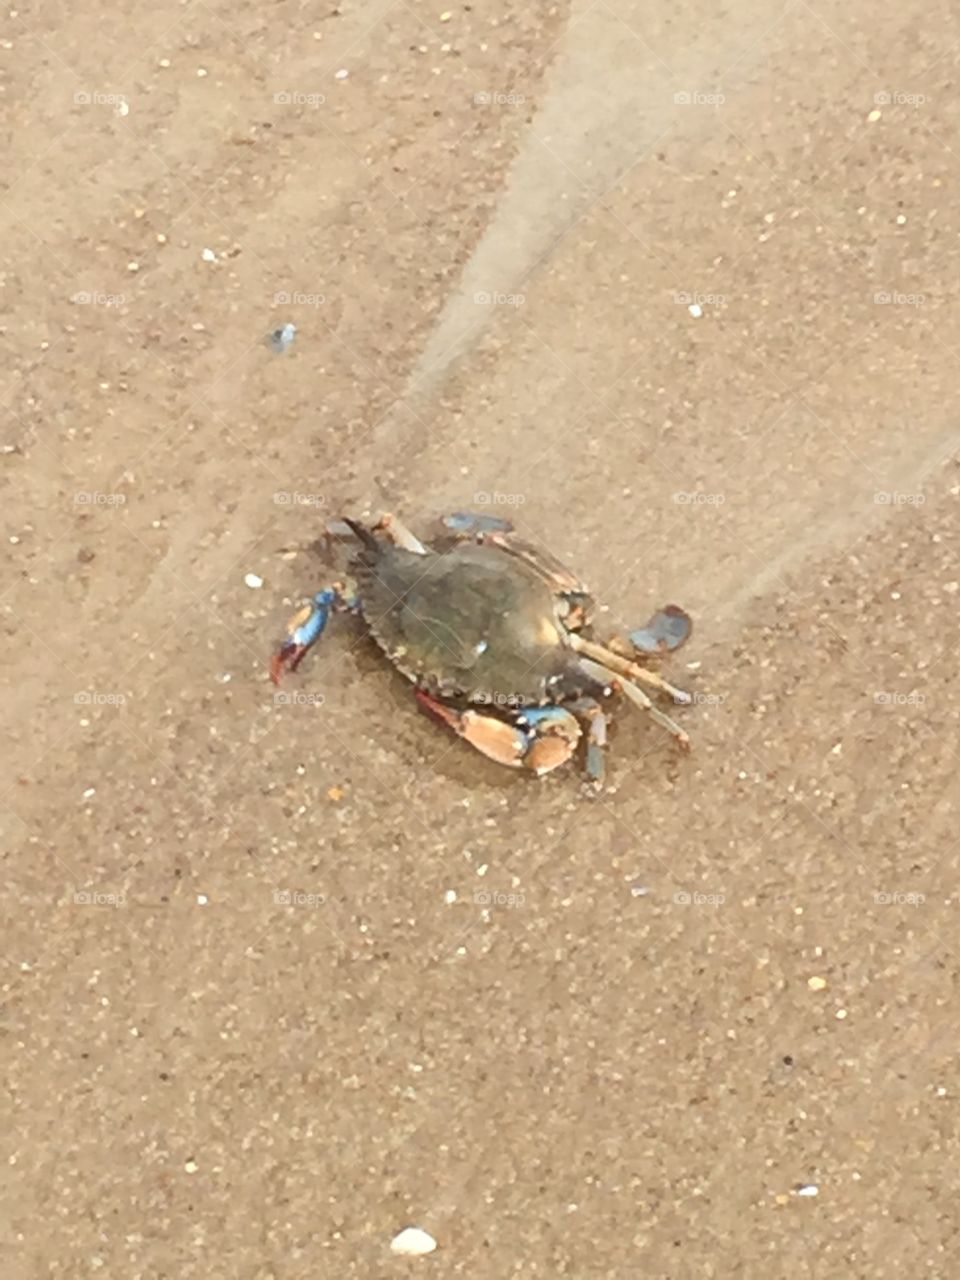 Maryland blue crab